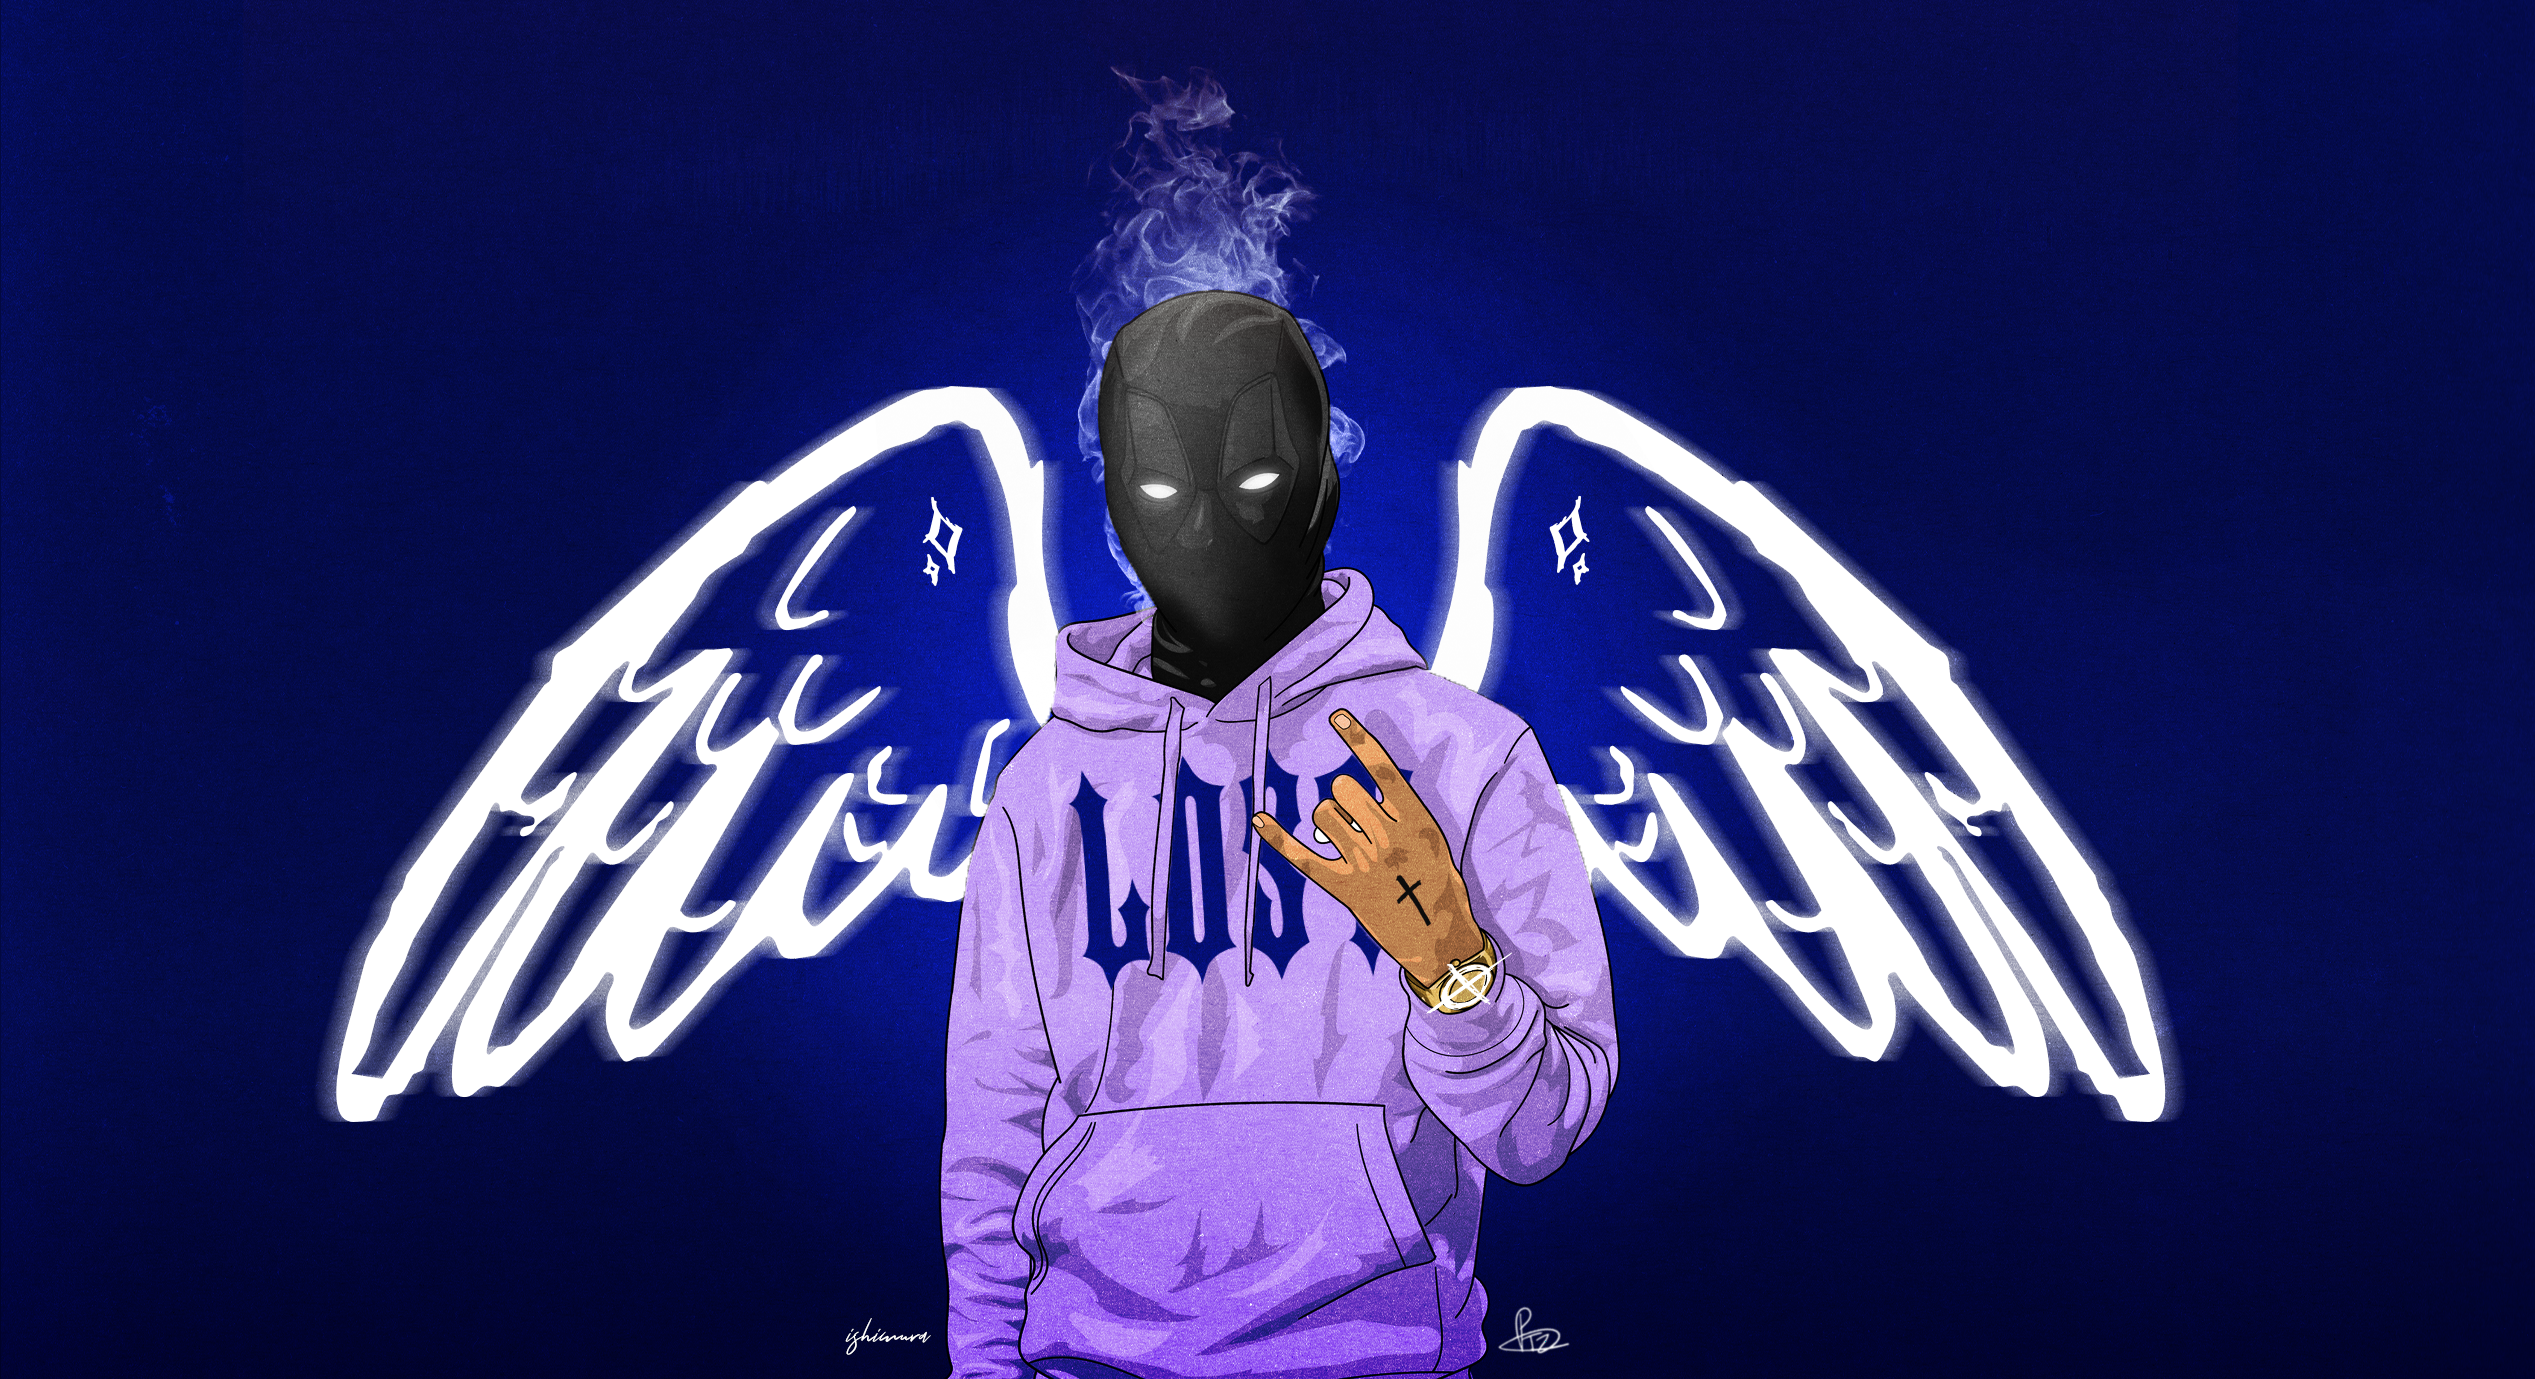 Hip Hop Music Gangster Wings Mask Balaclava Illustration Artwork Digital Art Graphic Design Blue Bac 2535x1379